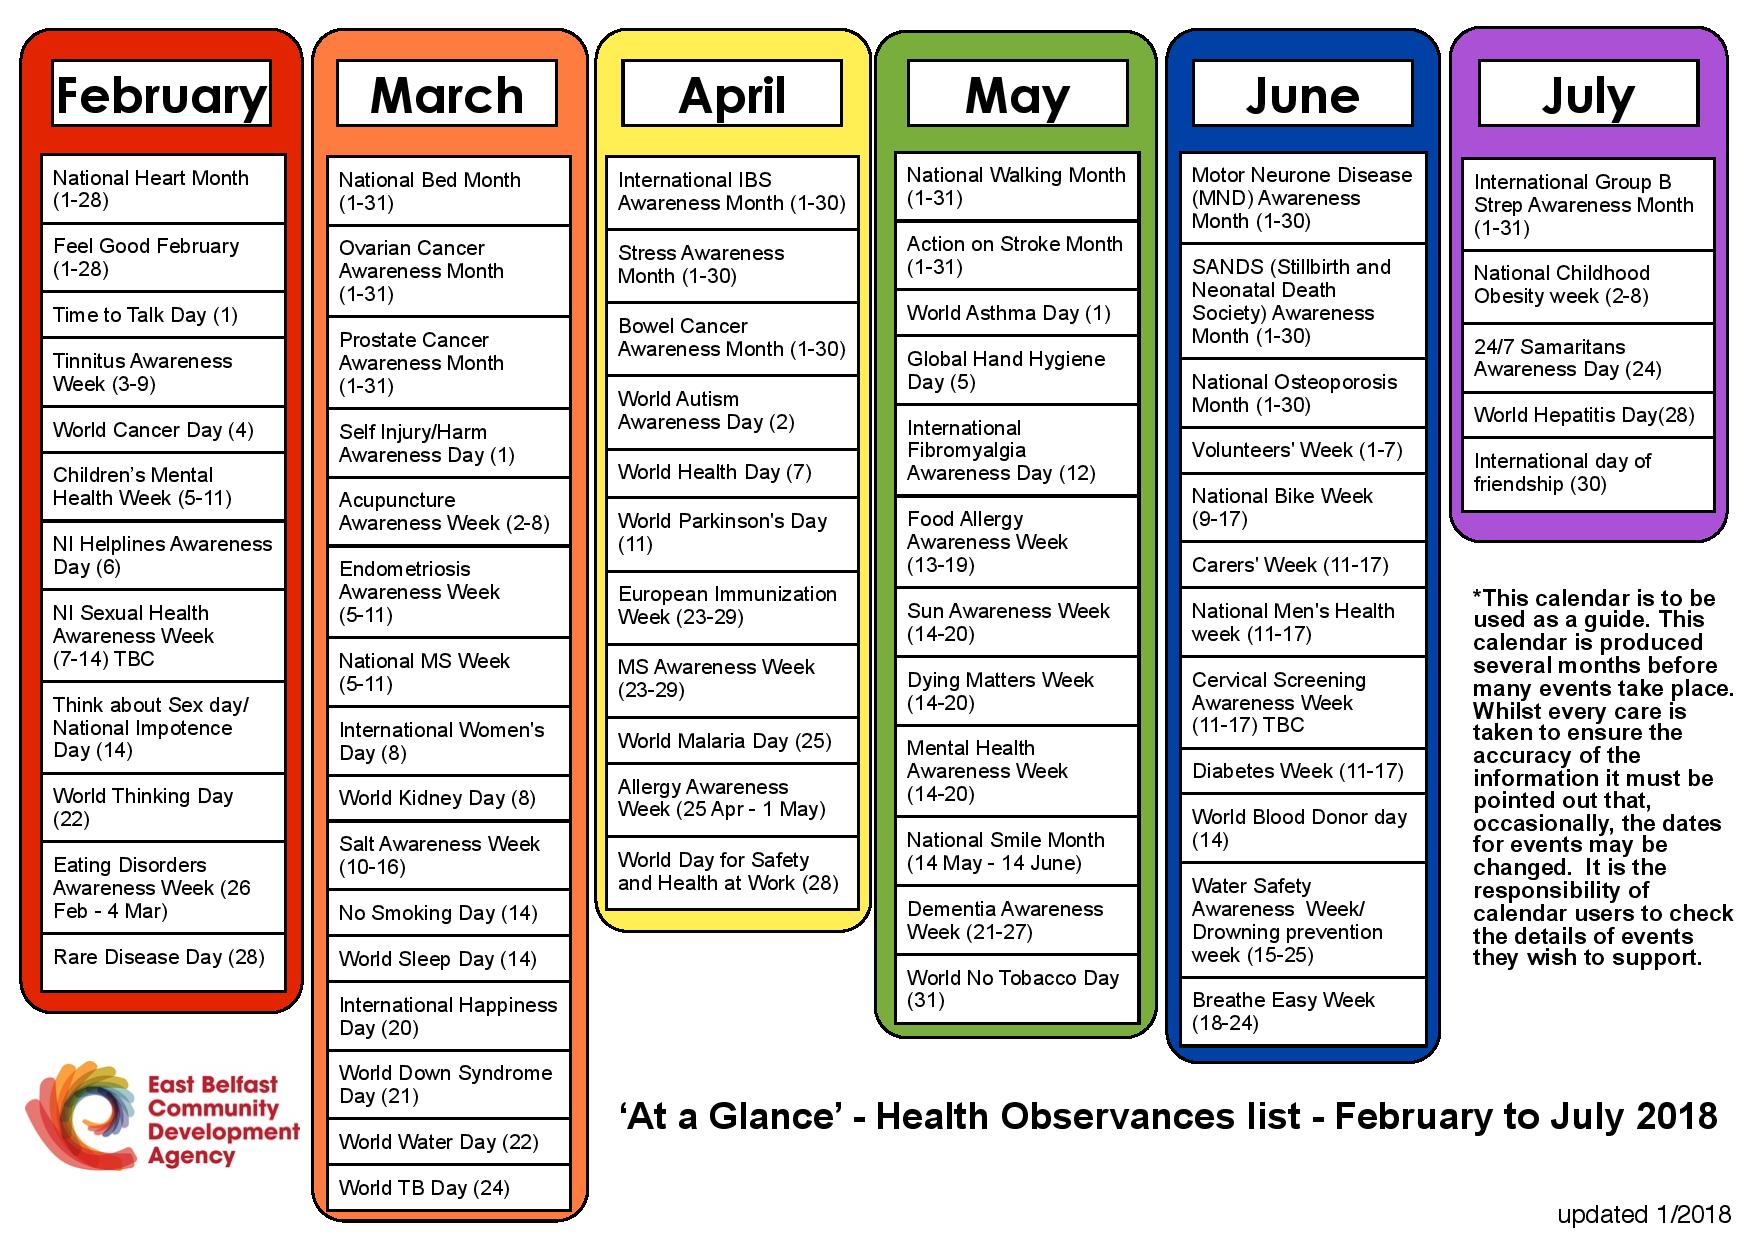 latest-list-of-health-observances-february-to-july-2018-east-belfast-community-development-agency